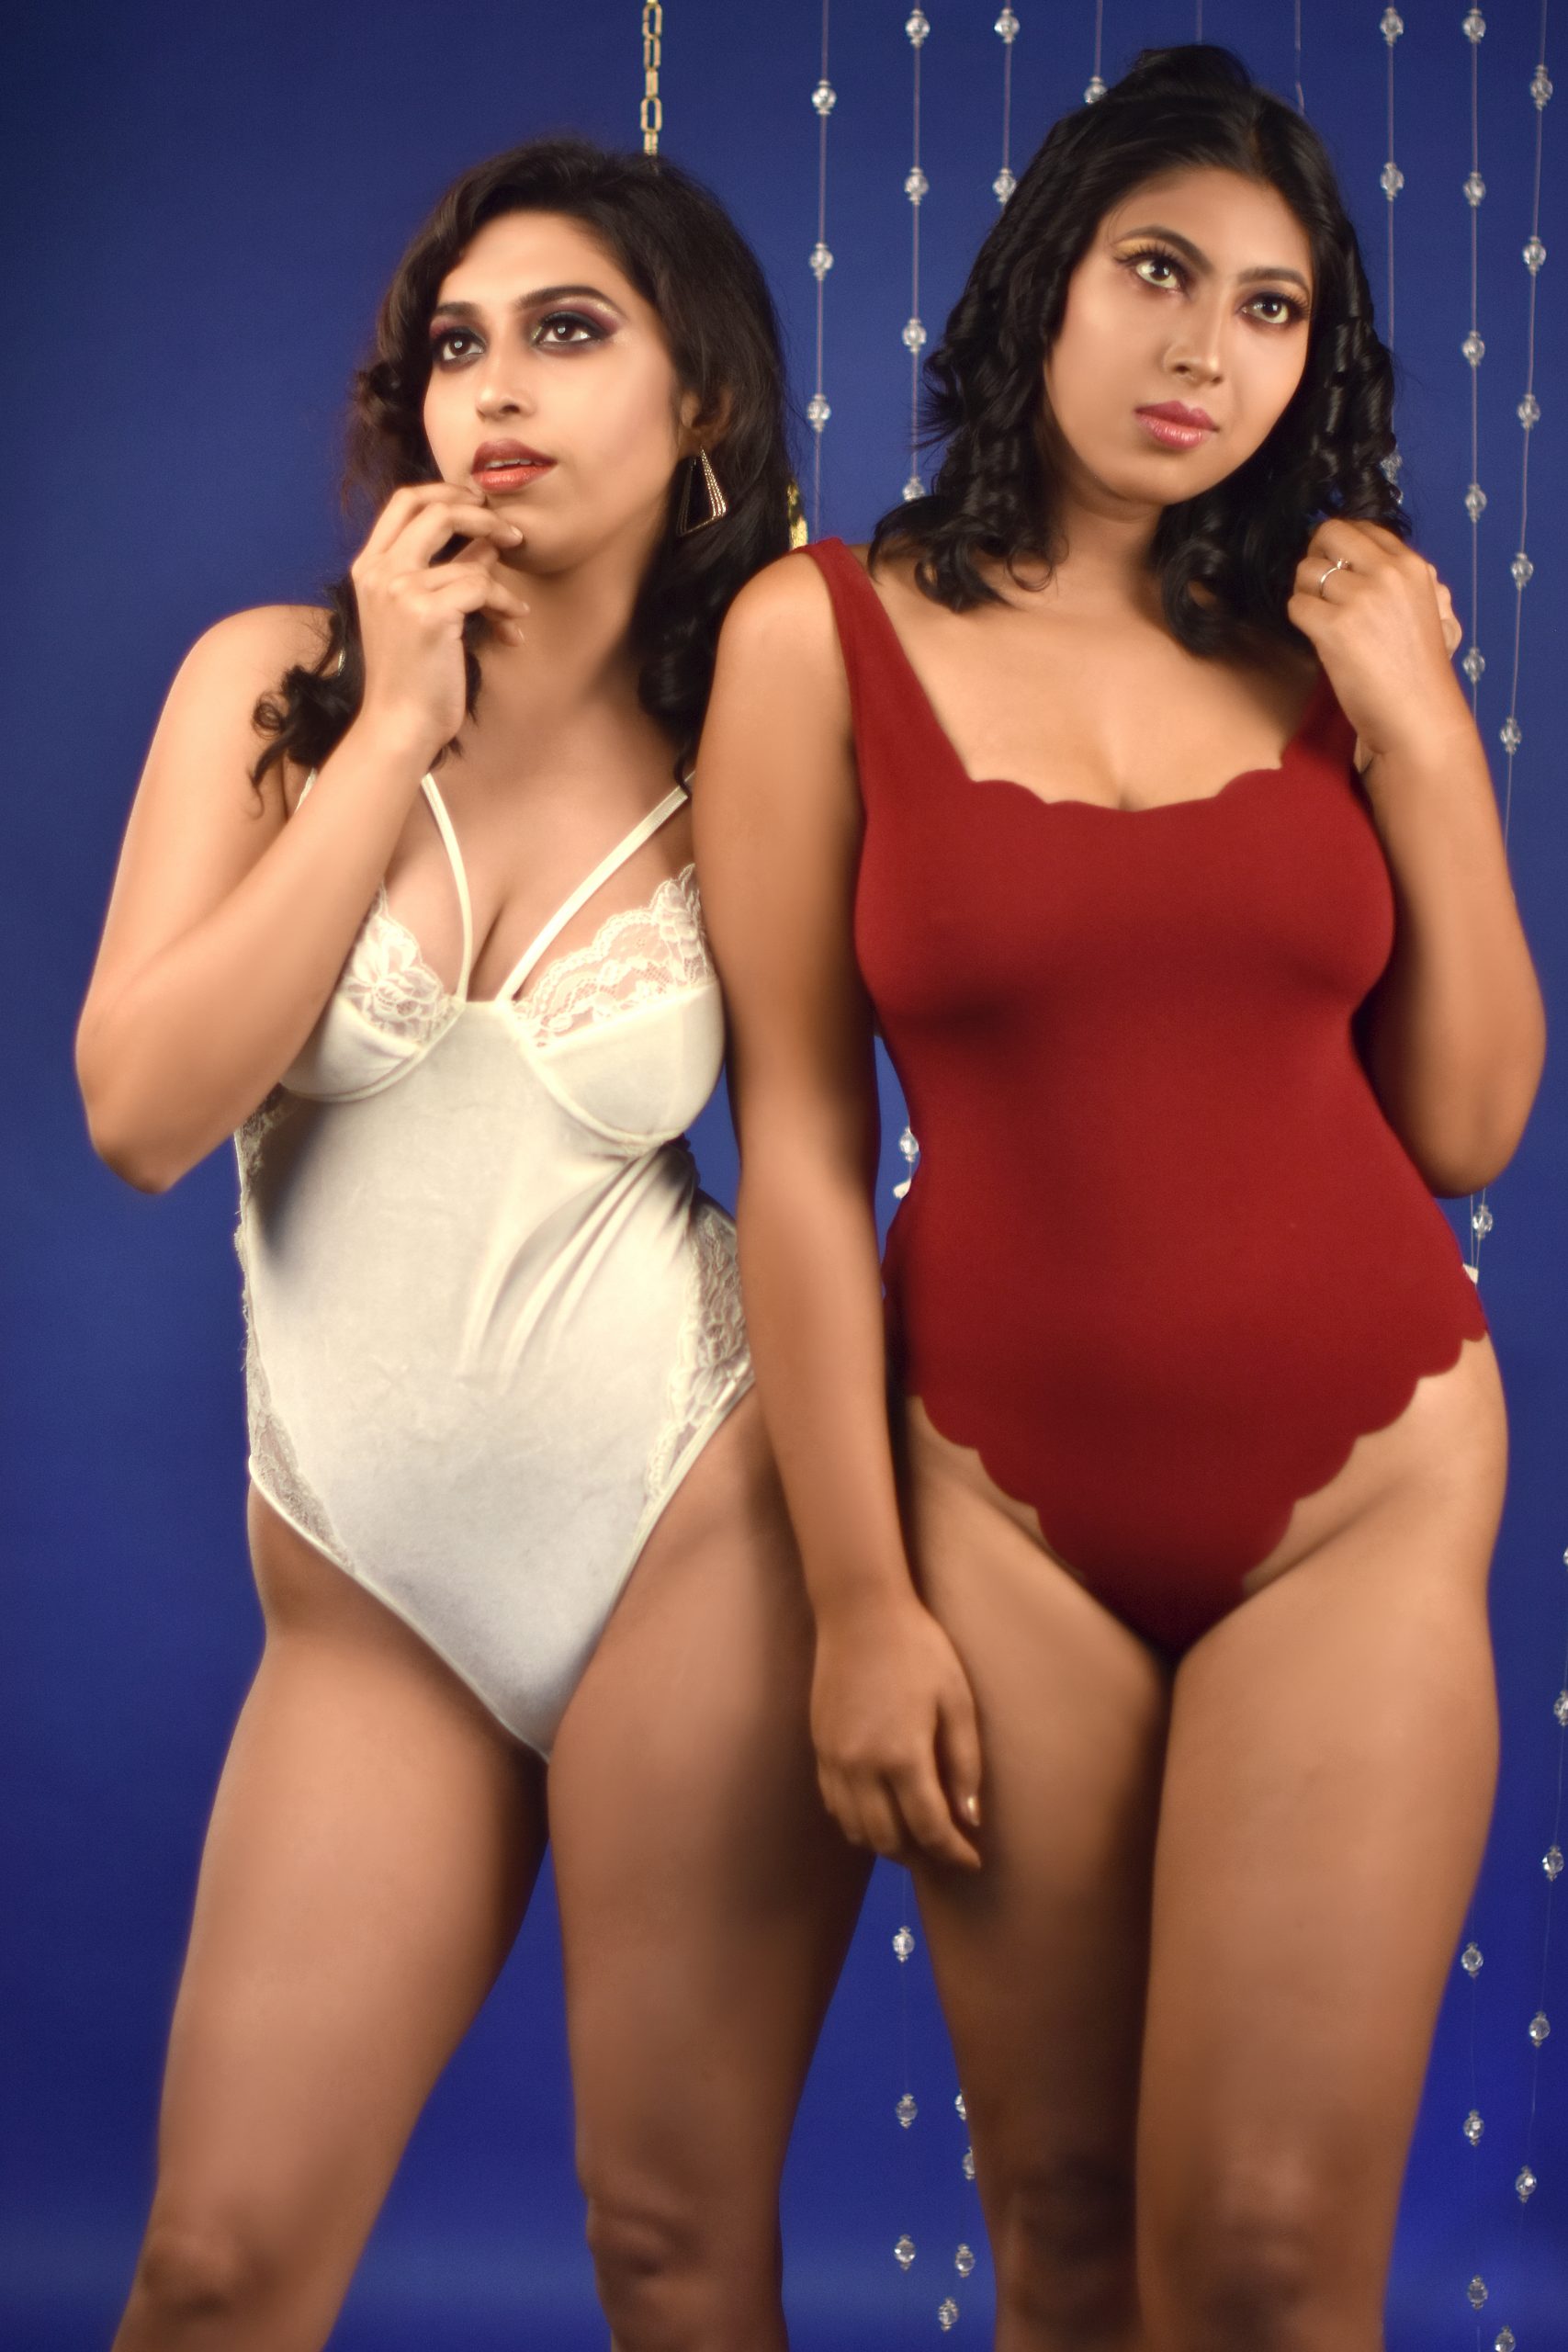 Two female fashion models